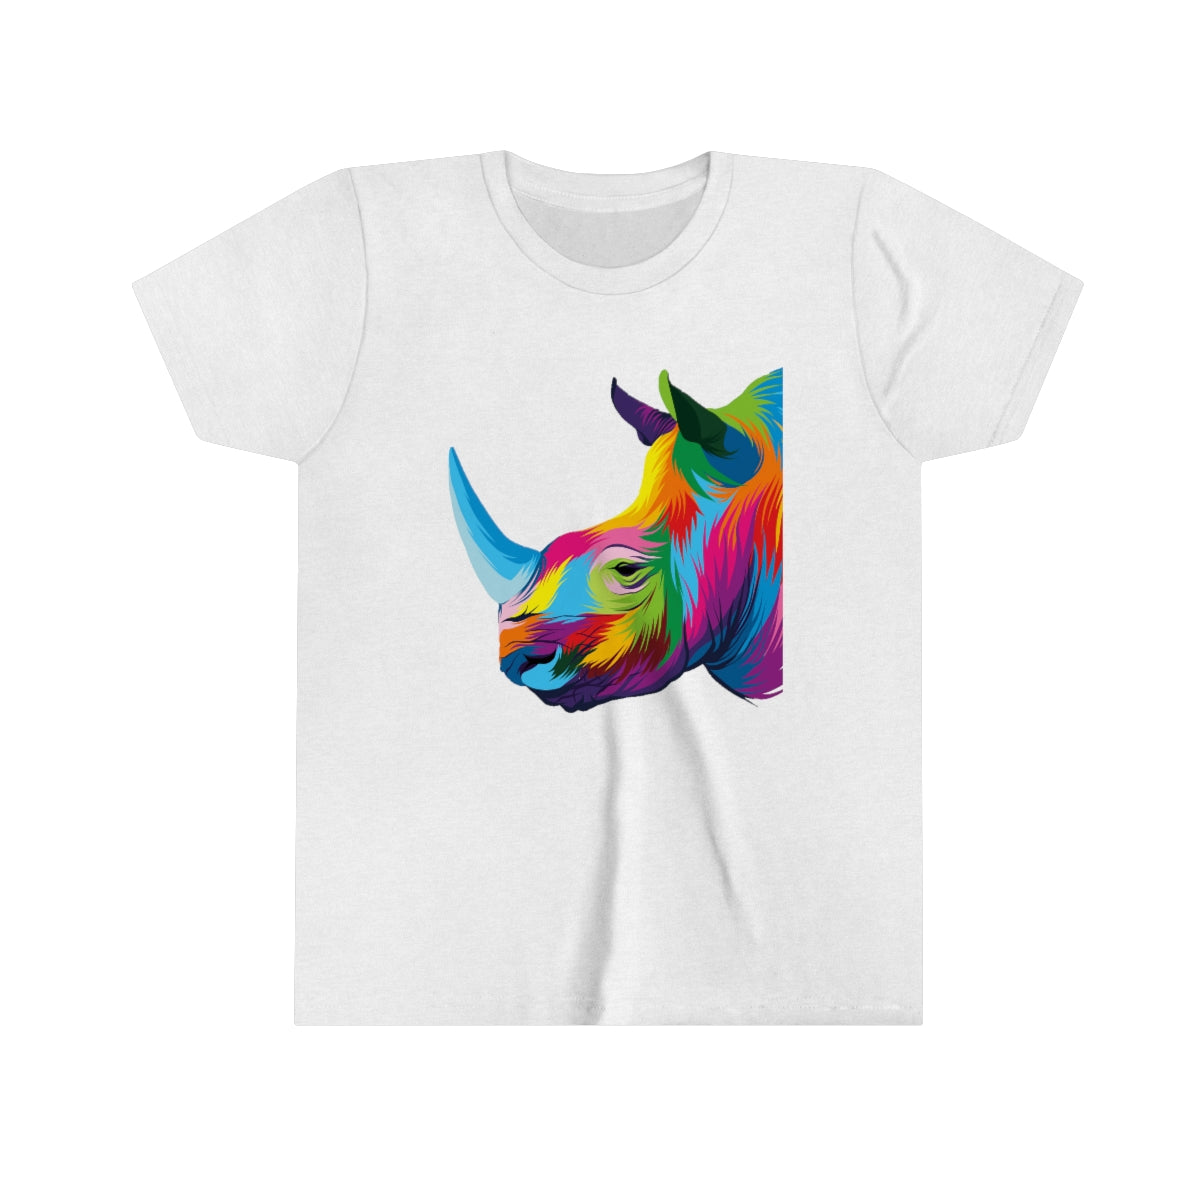 Youth Short Sleeve Tee "Abstract colorful Rhino"